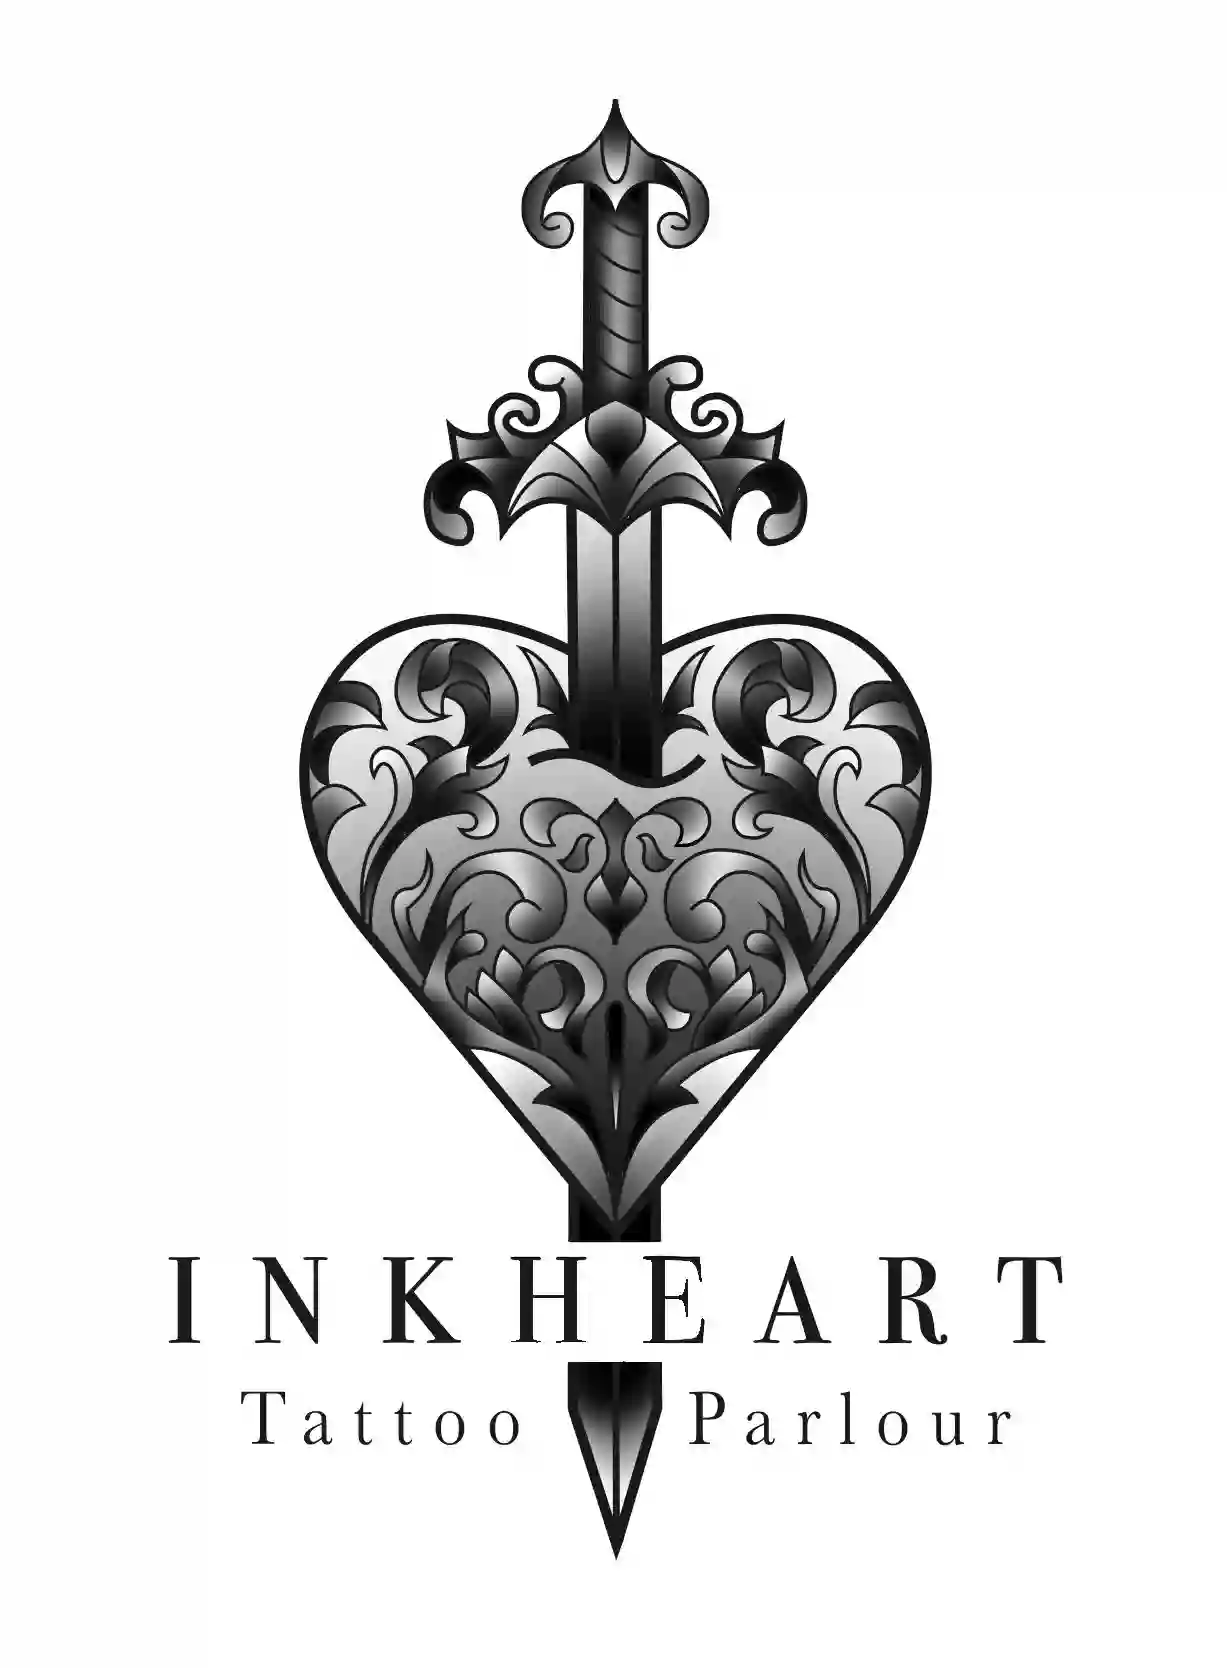 Inkheart Tattoo Parlour